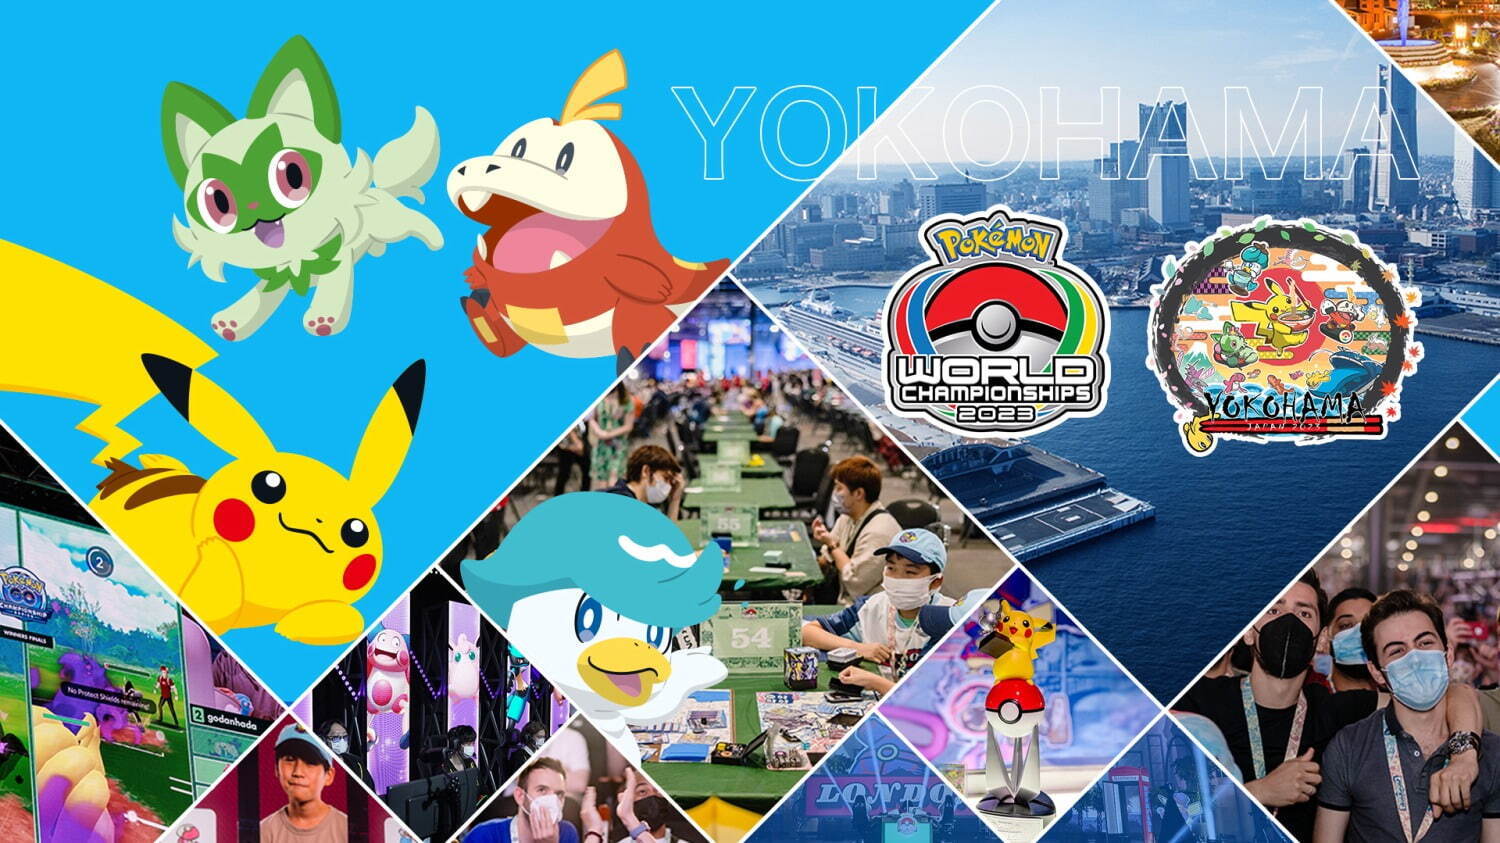 Pokémon Worlds Celebration Events 2023 turns all of Yokohama Pokémon-themed, fans enjoy festivities